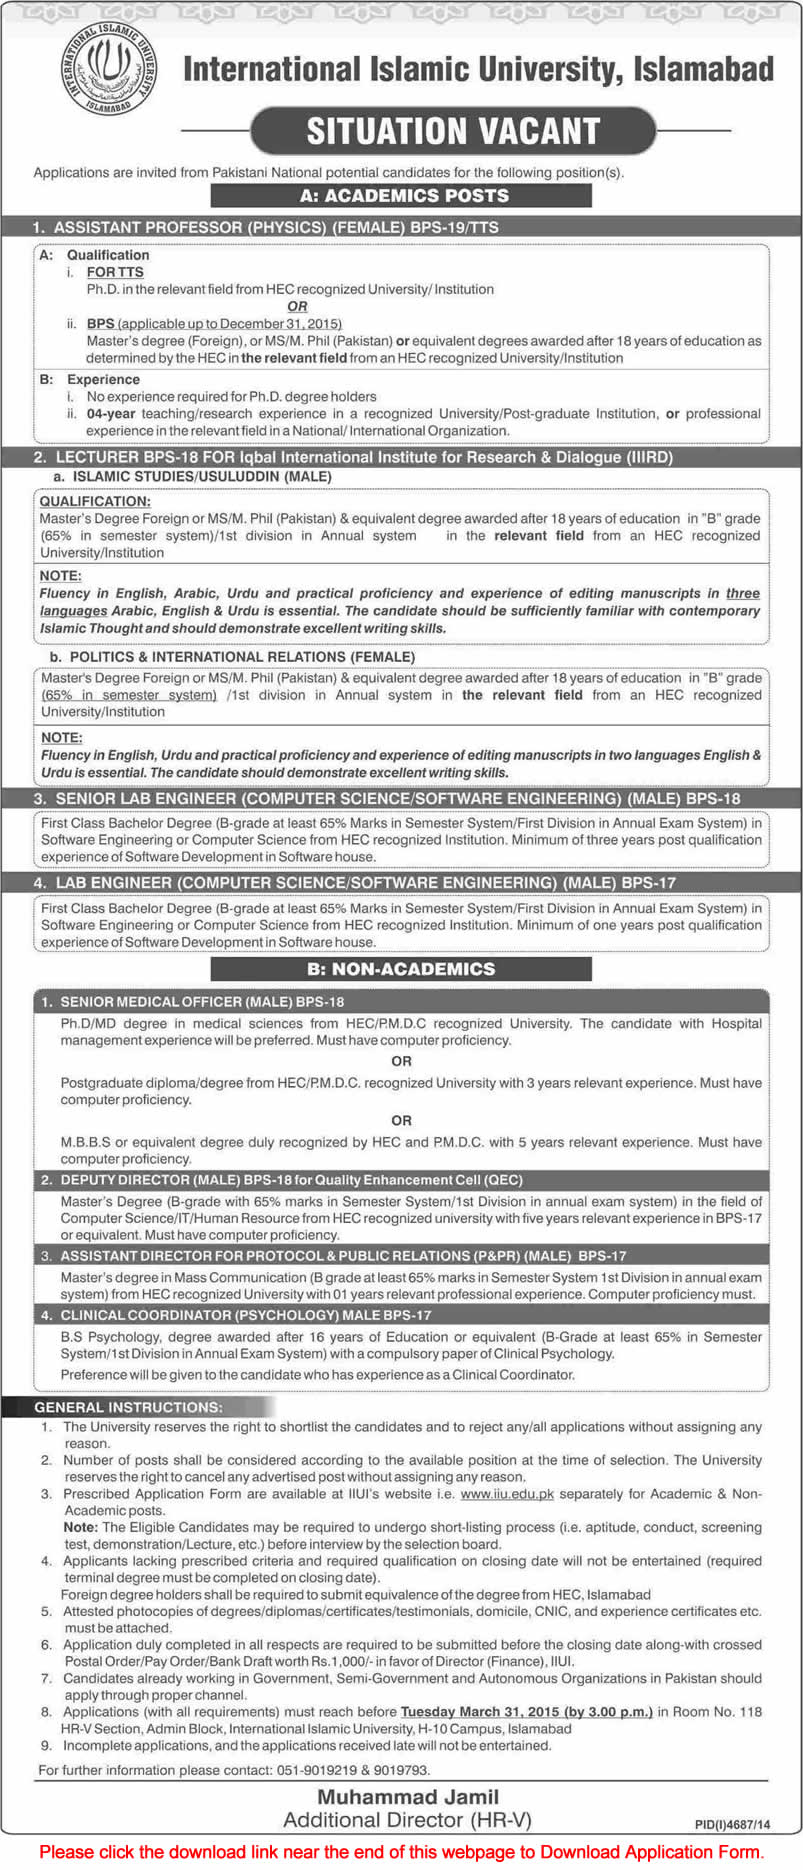 International Islamic University Islamabad Jobs 2015 March Application Form Teaching Faculty & Admin Staff